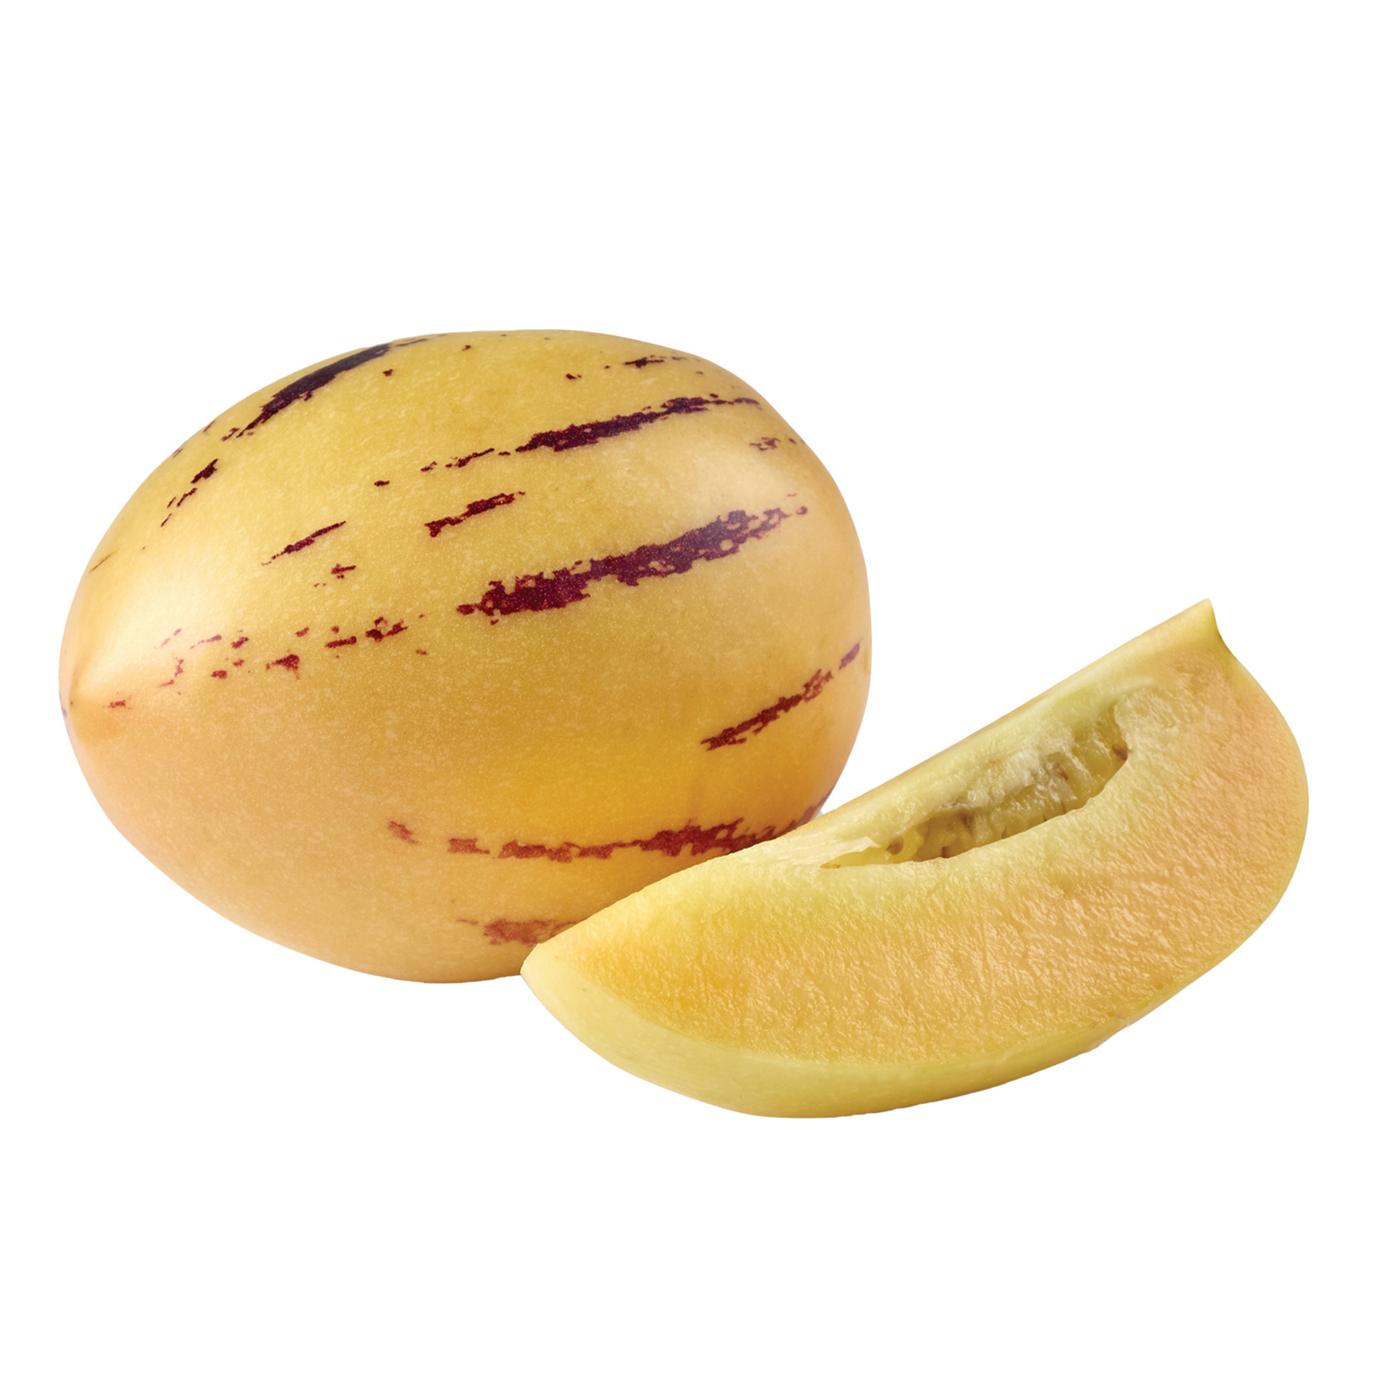 Fresh Pepino Melon; image 1 of 2